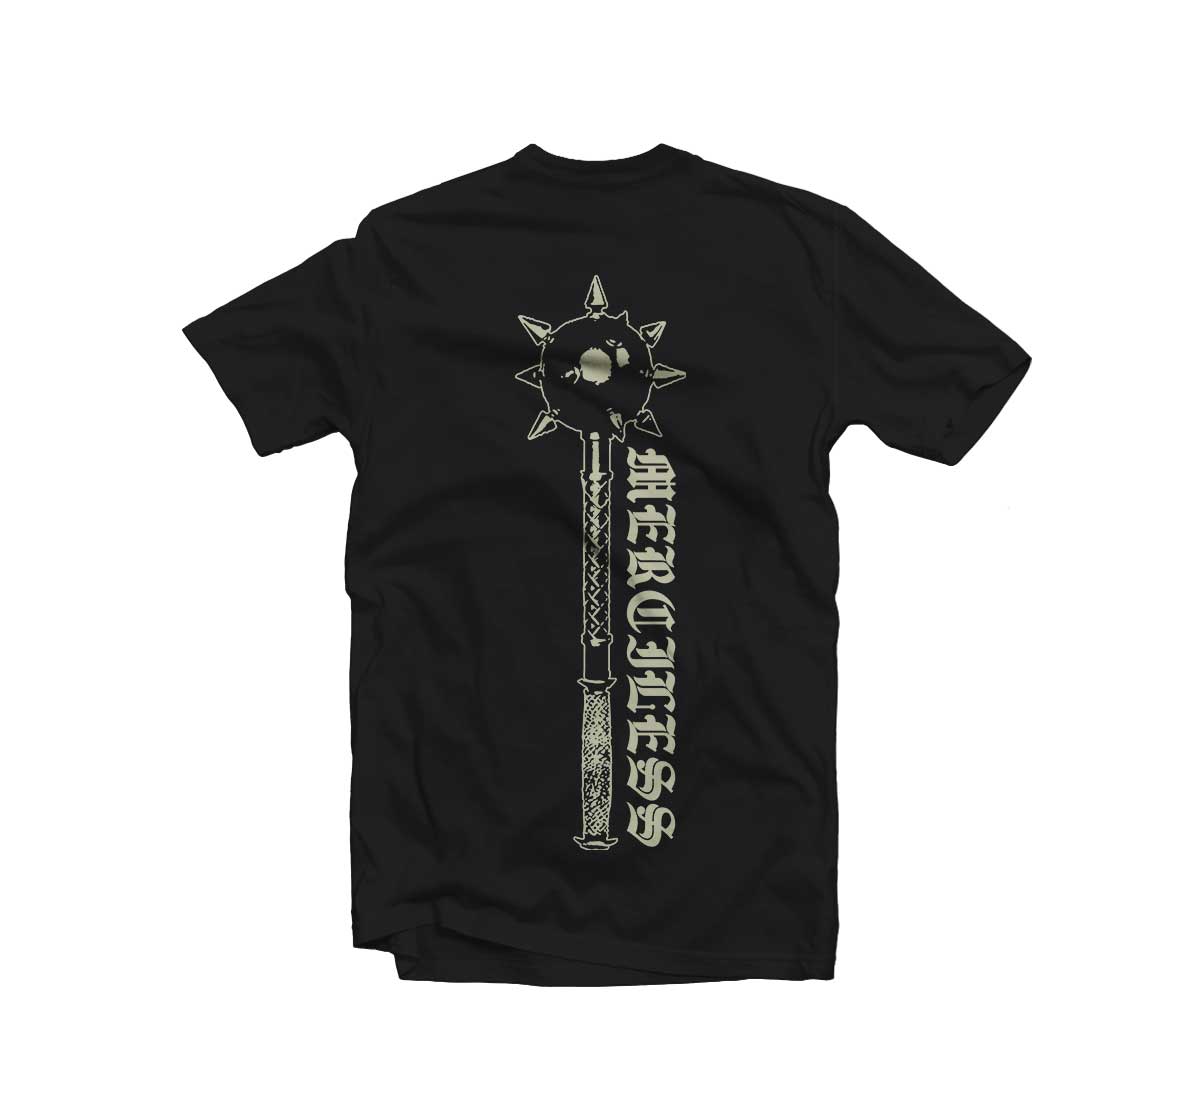 HARDMIND "Merciless" Black T-Shirt